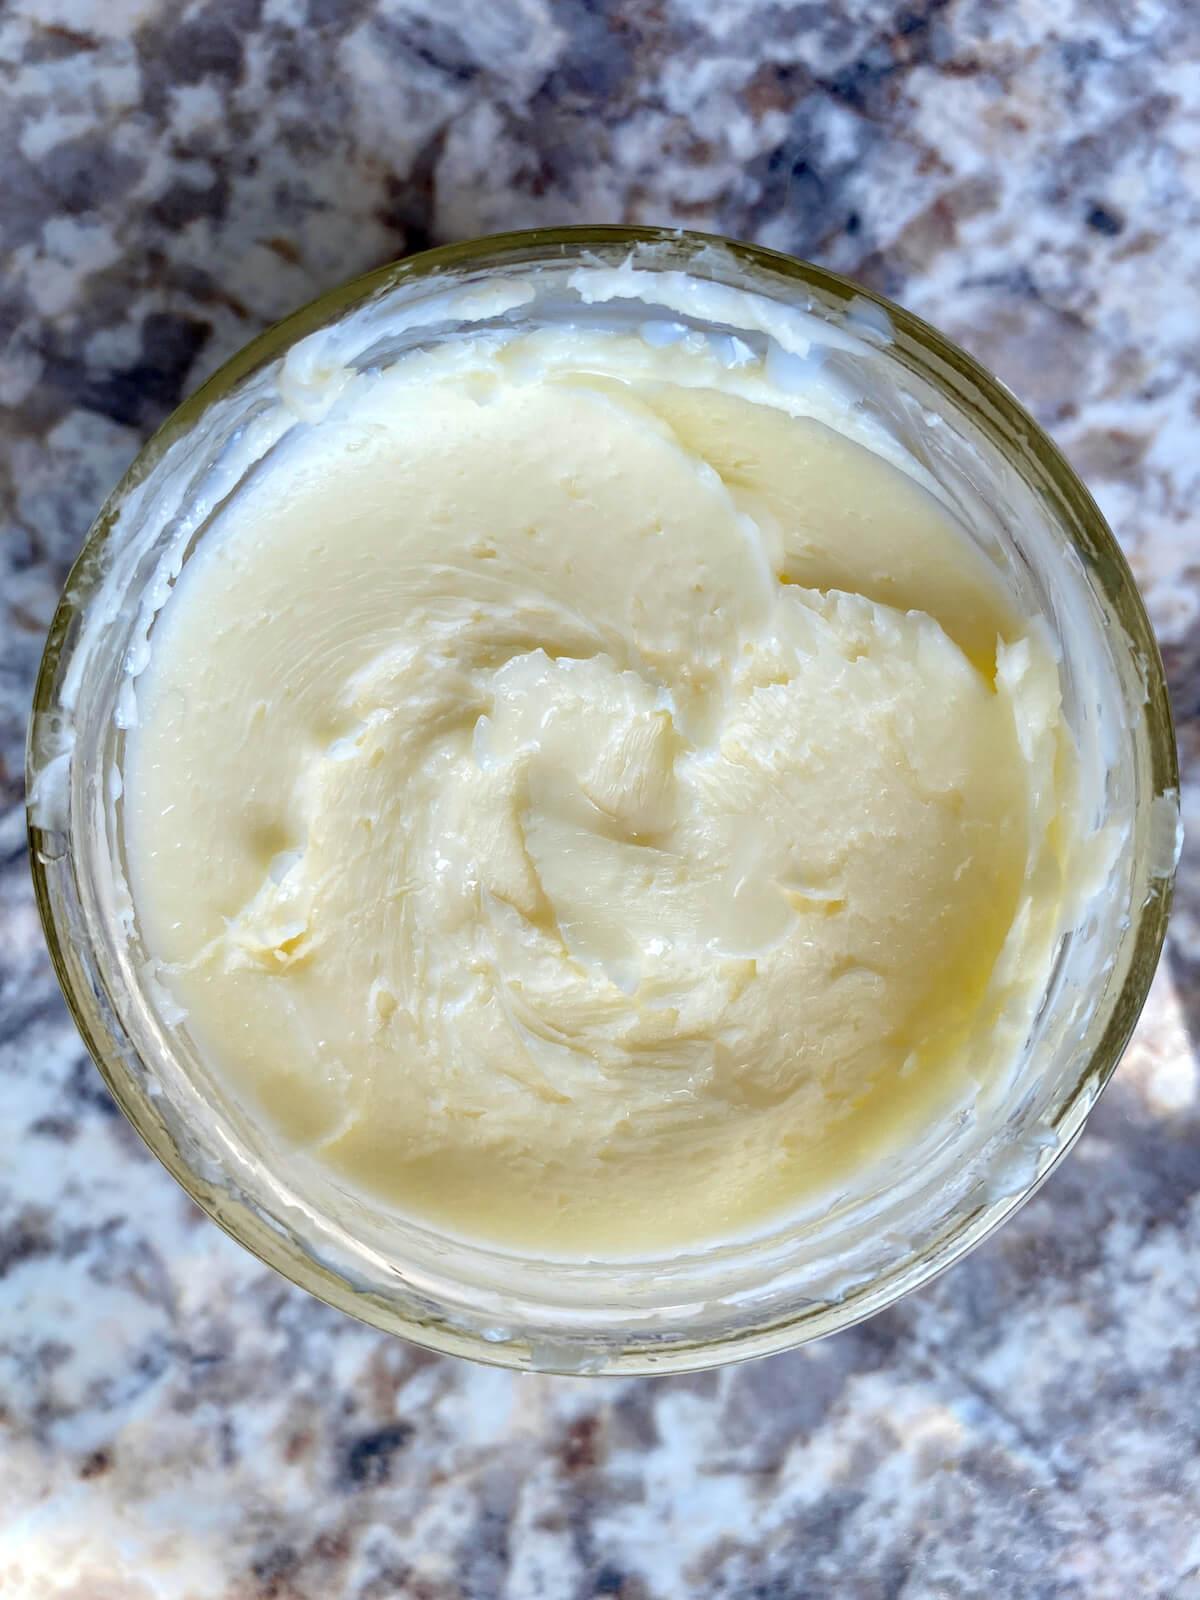 Homemade butter in a small glass mason jar.